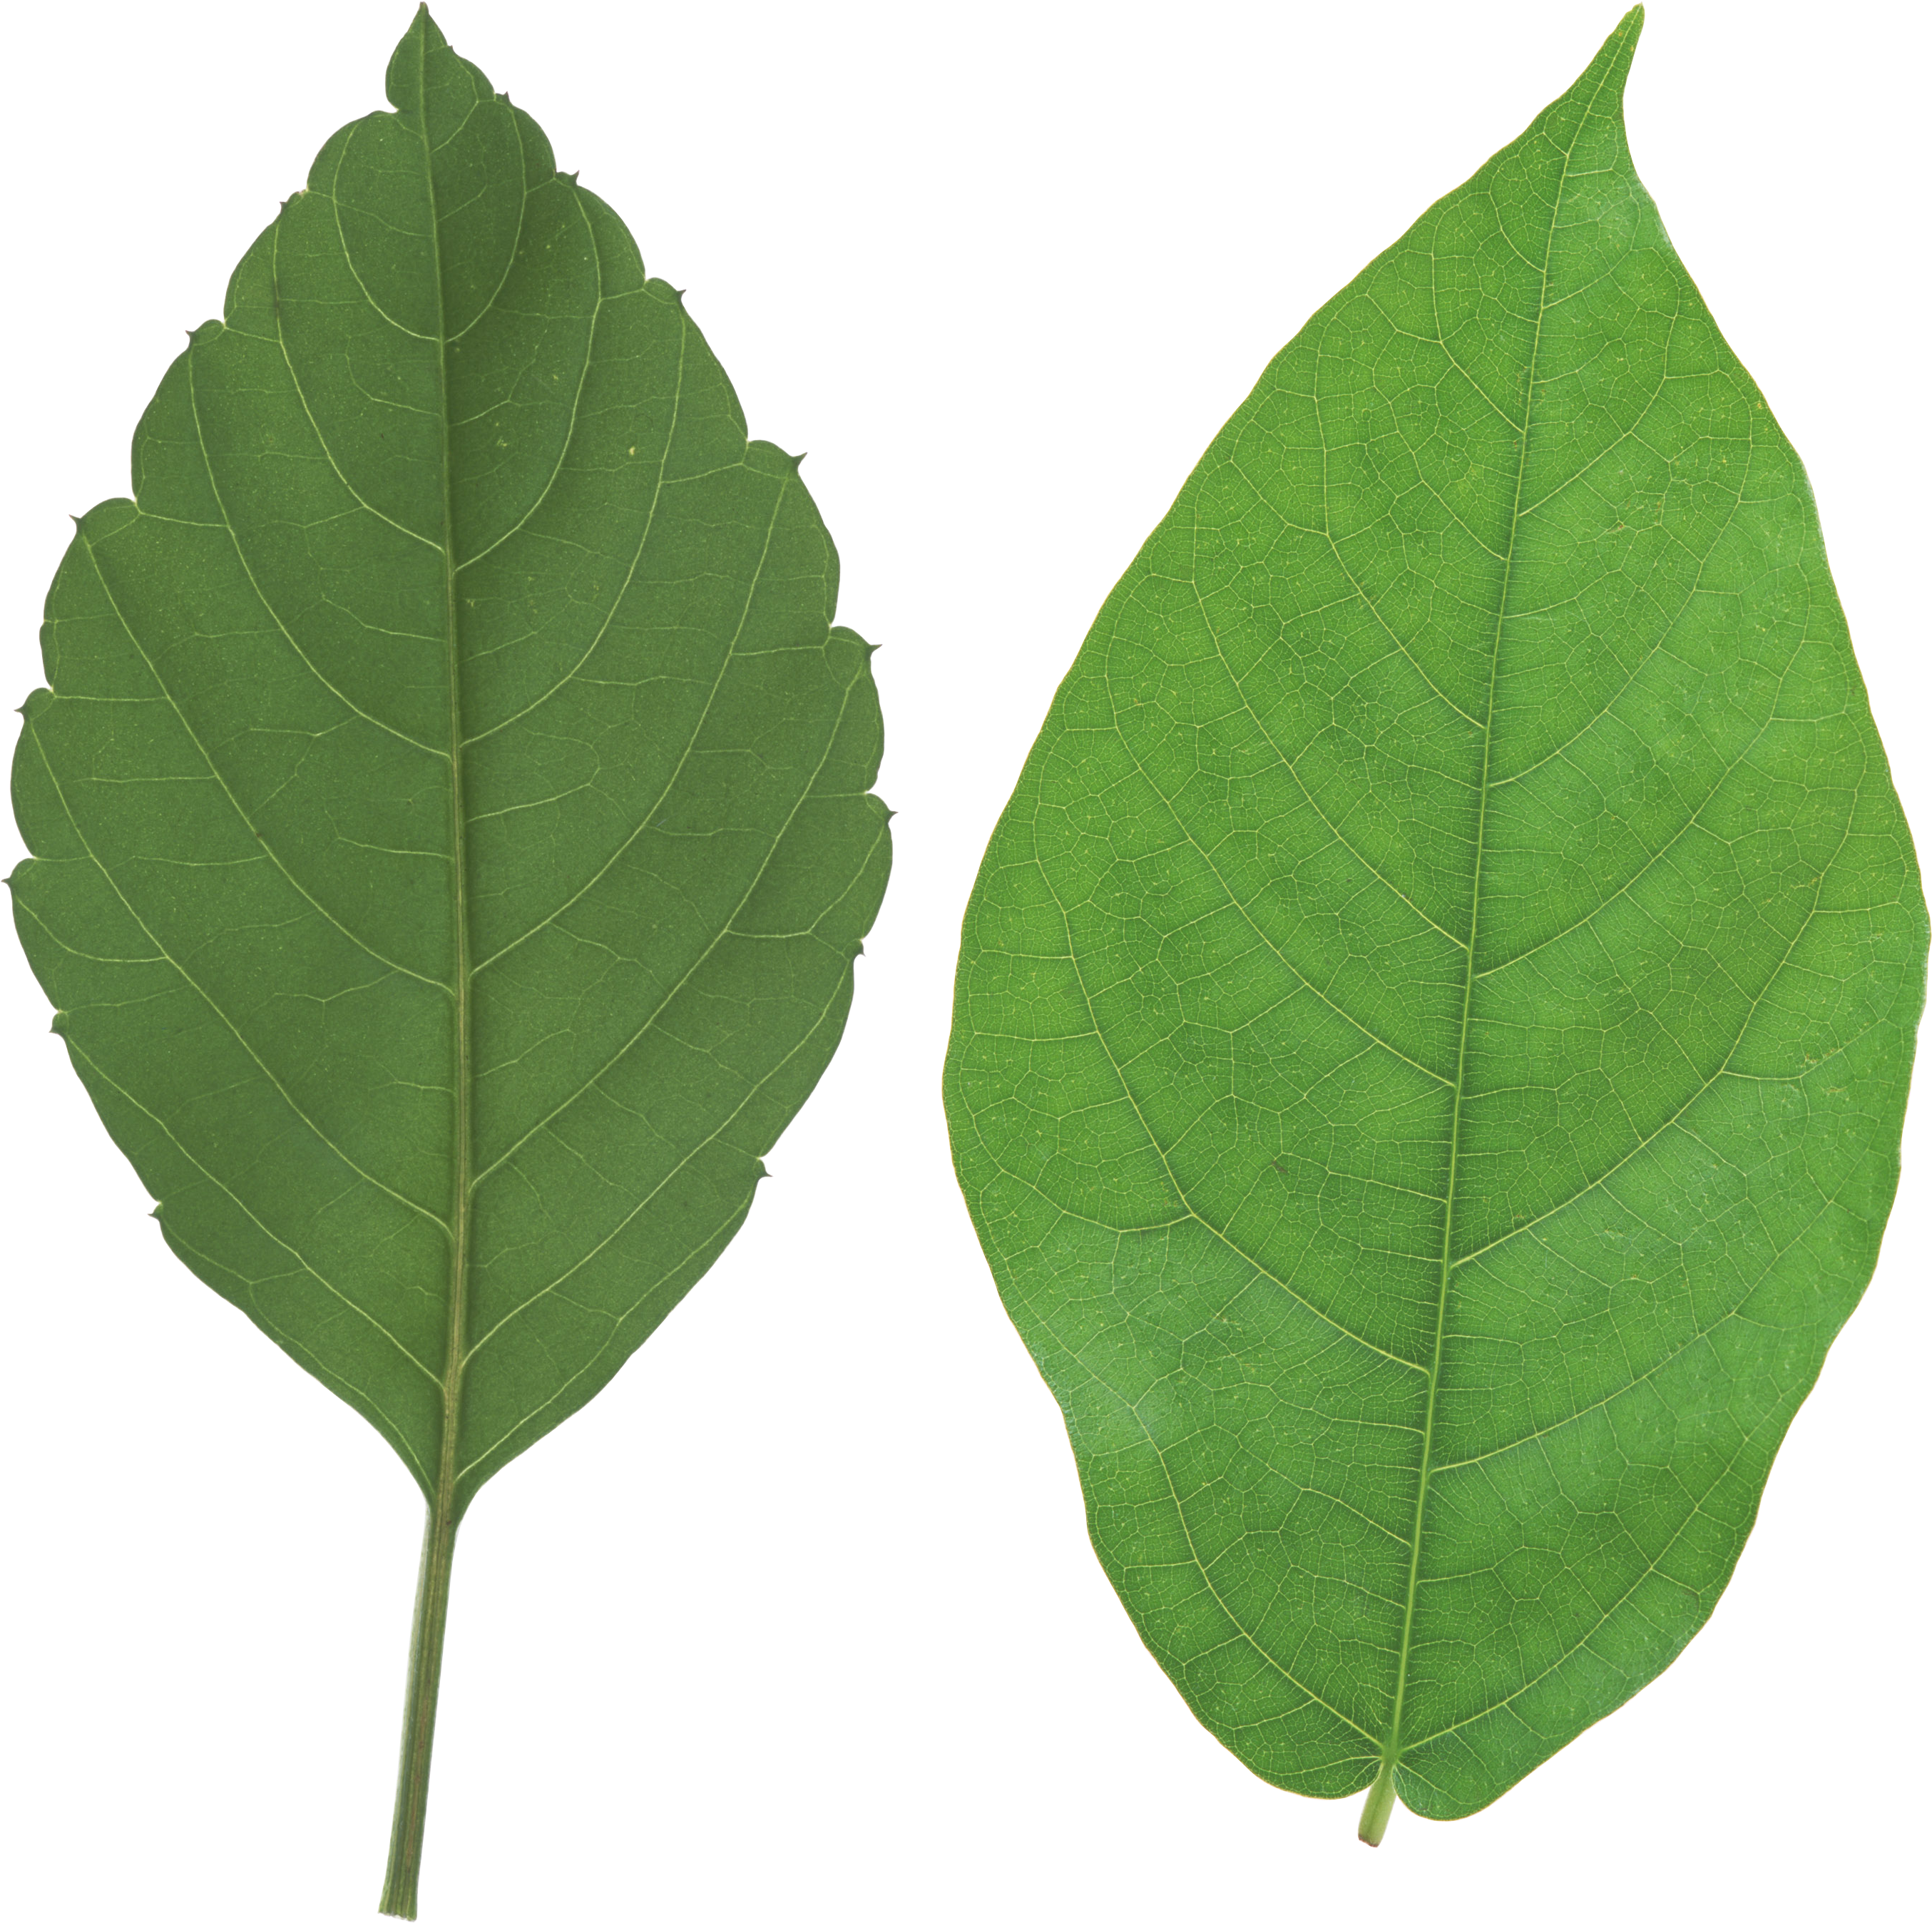 Green Leaf Pair Transparent Background PNG image